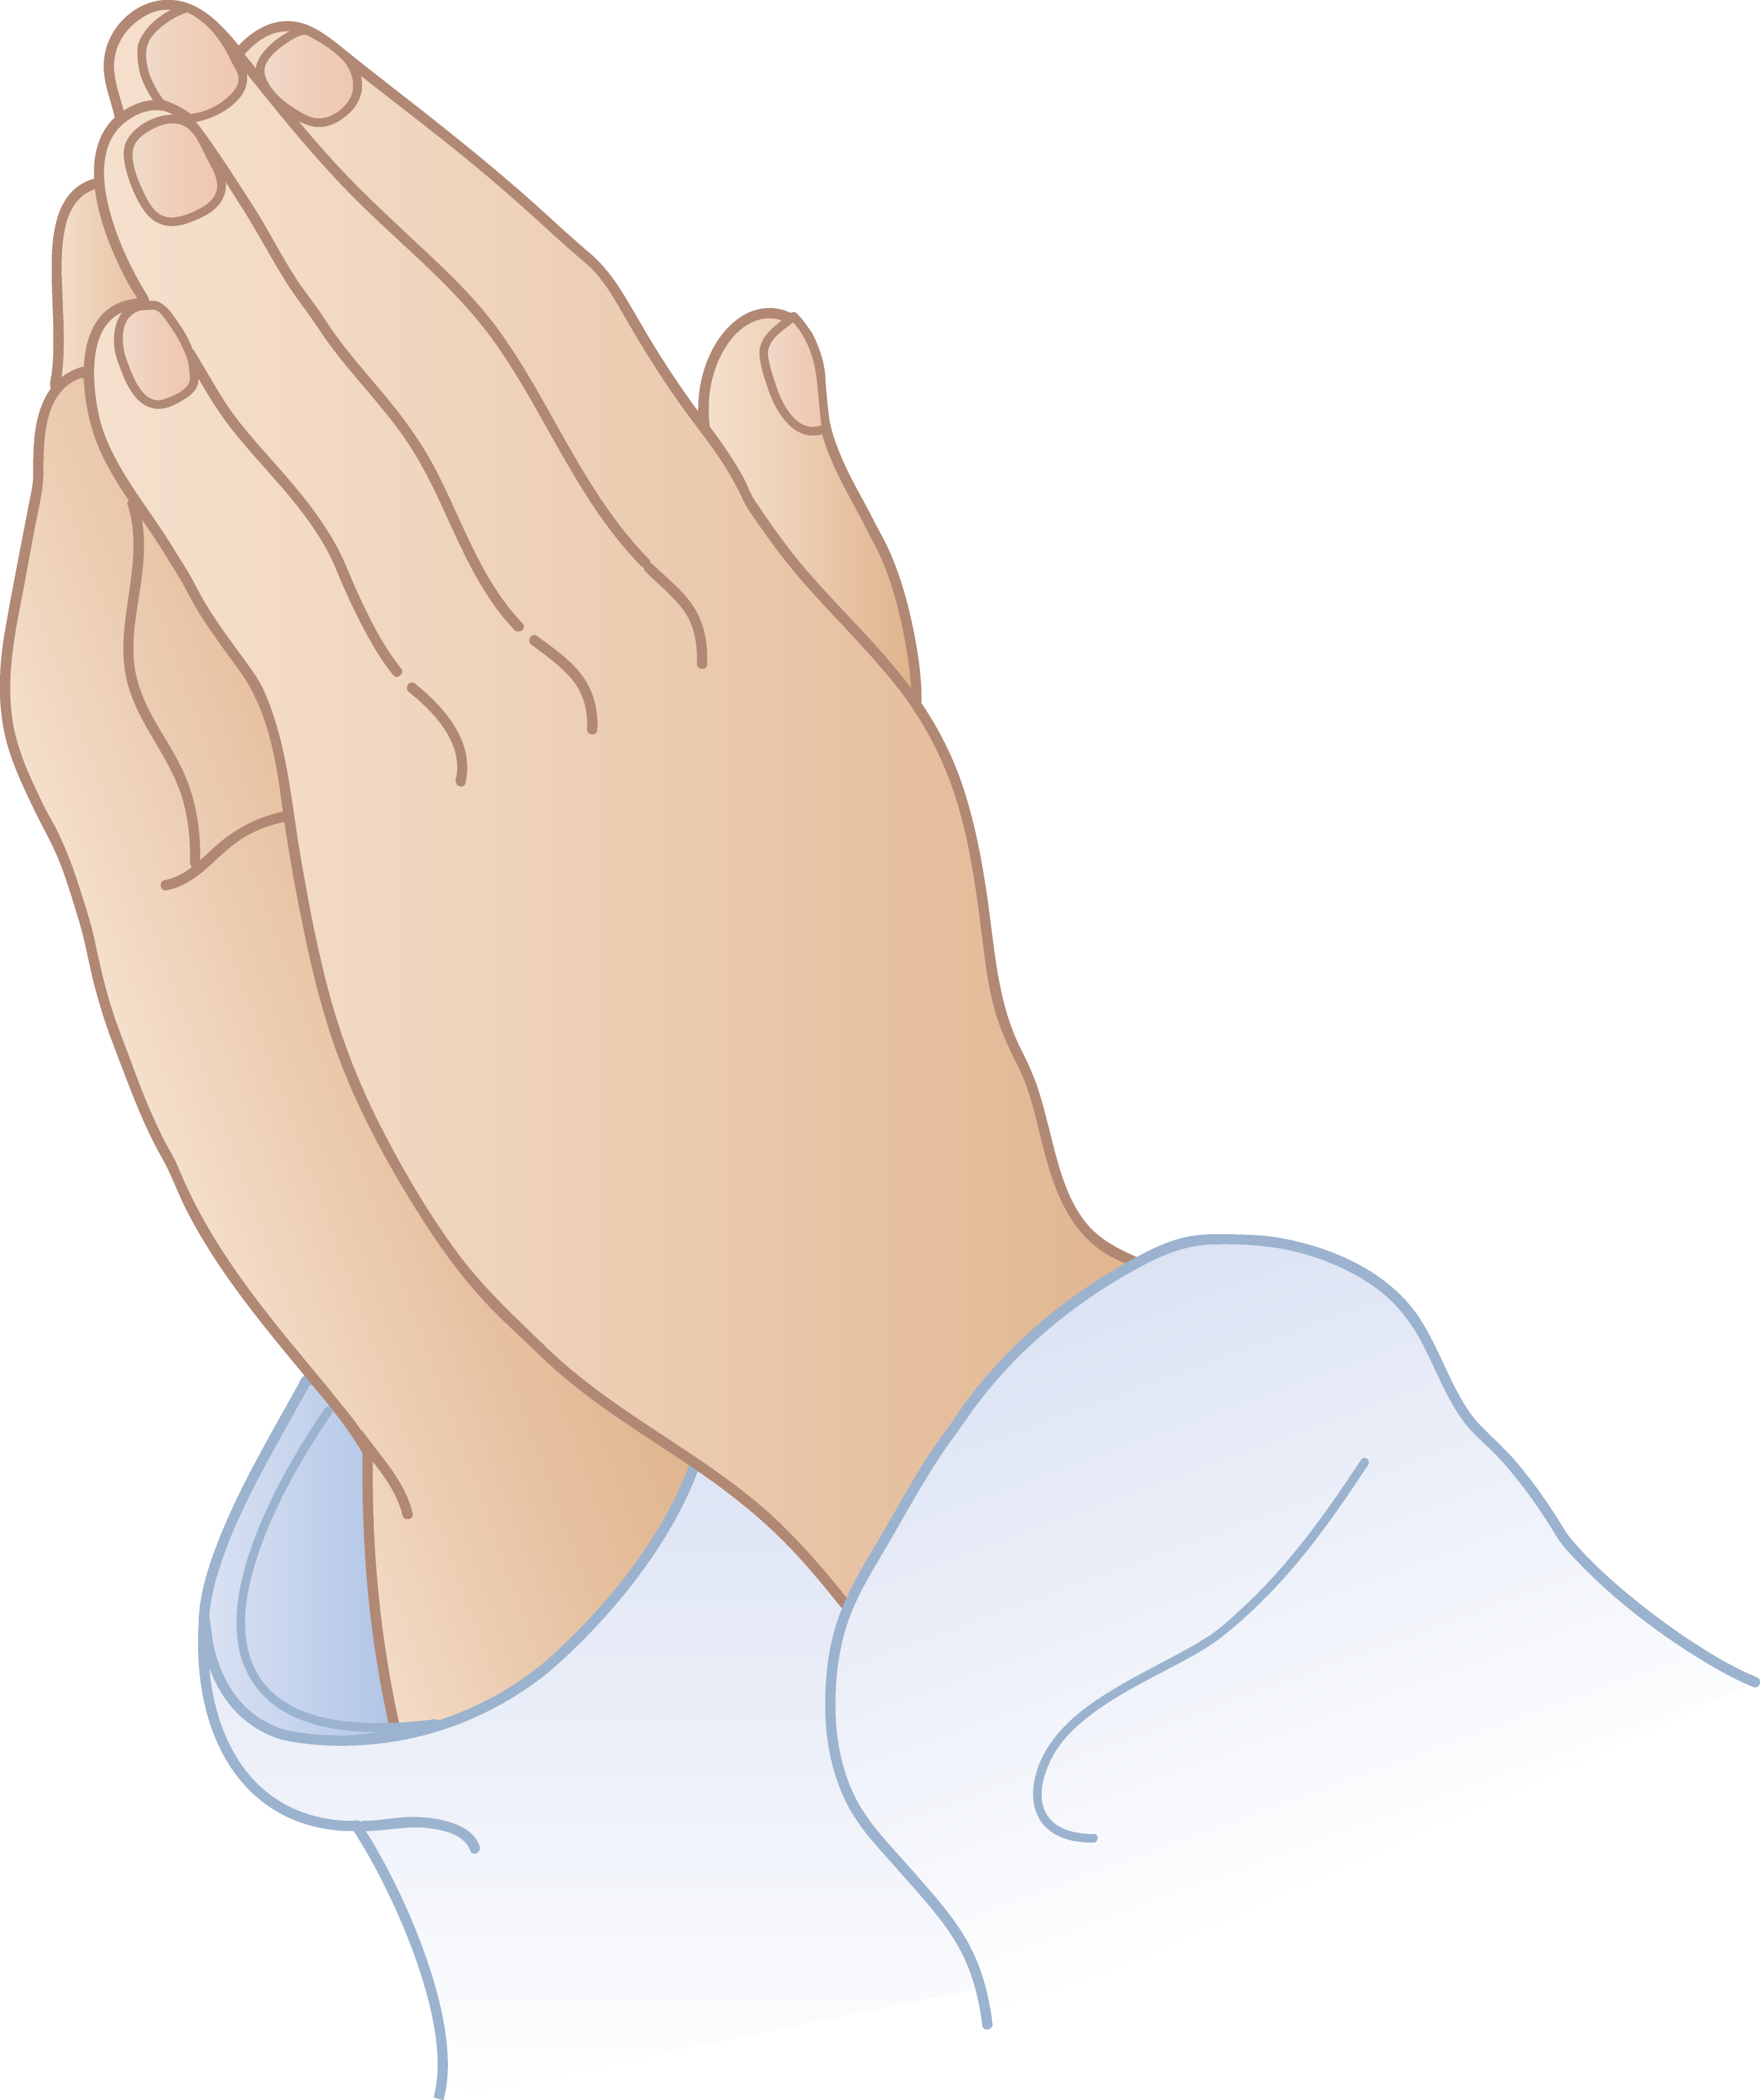 Free Printable Images Of Praying Hands